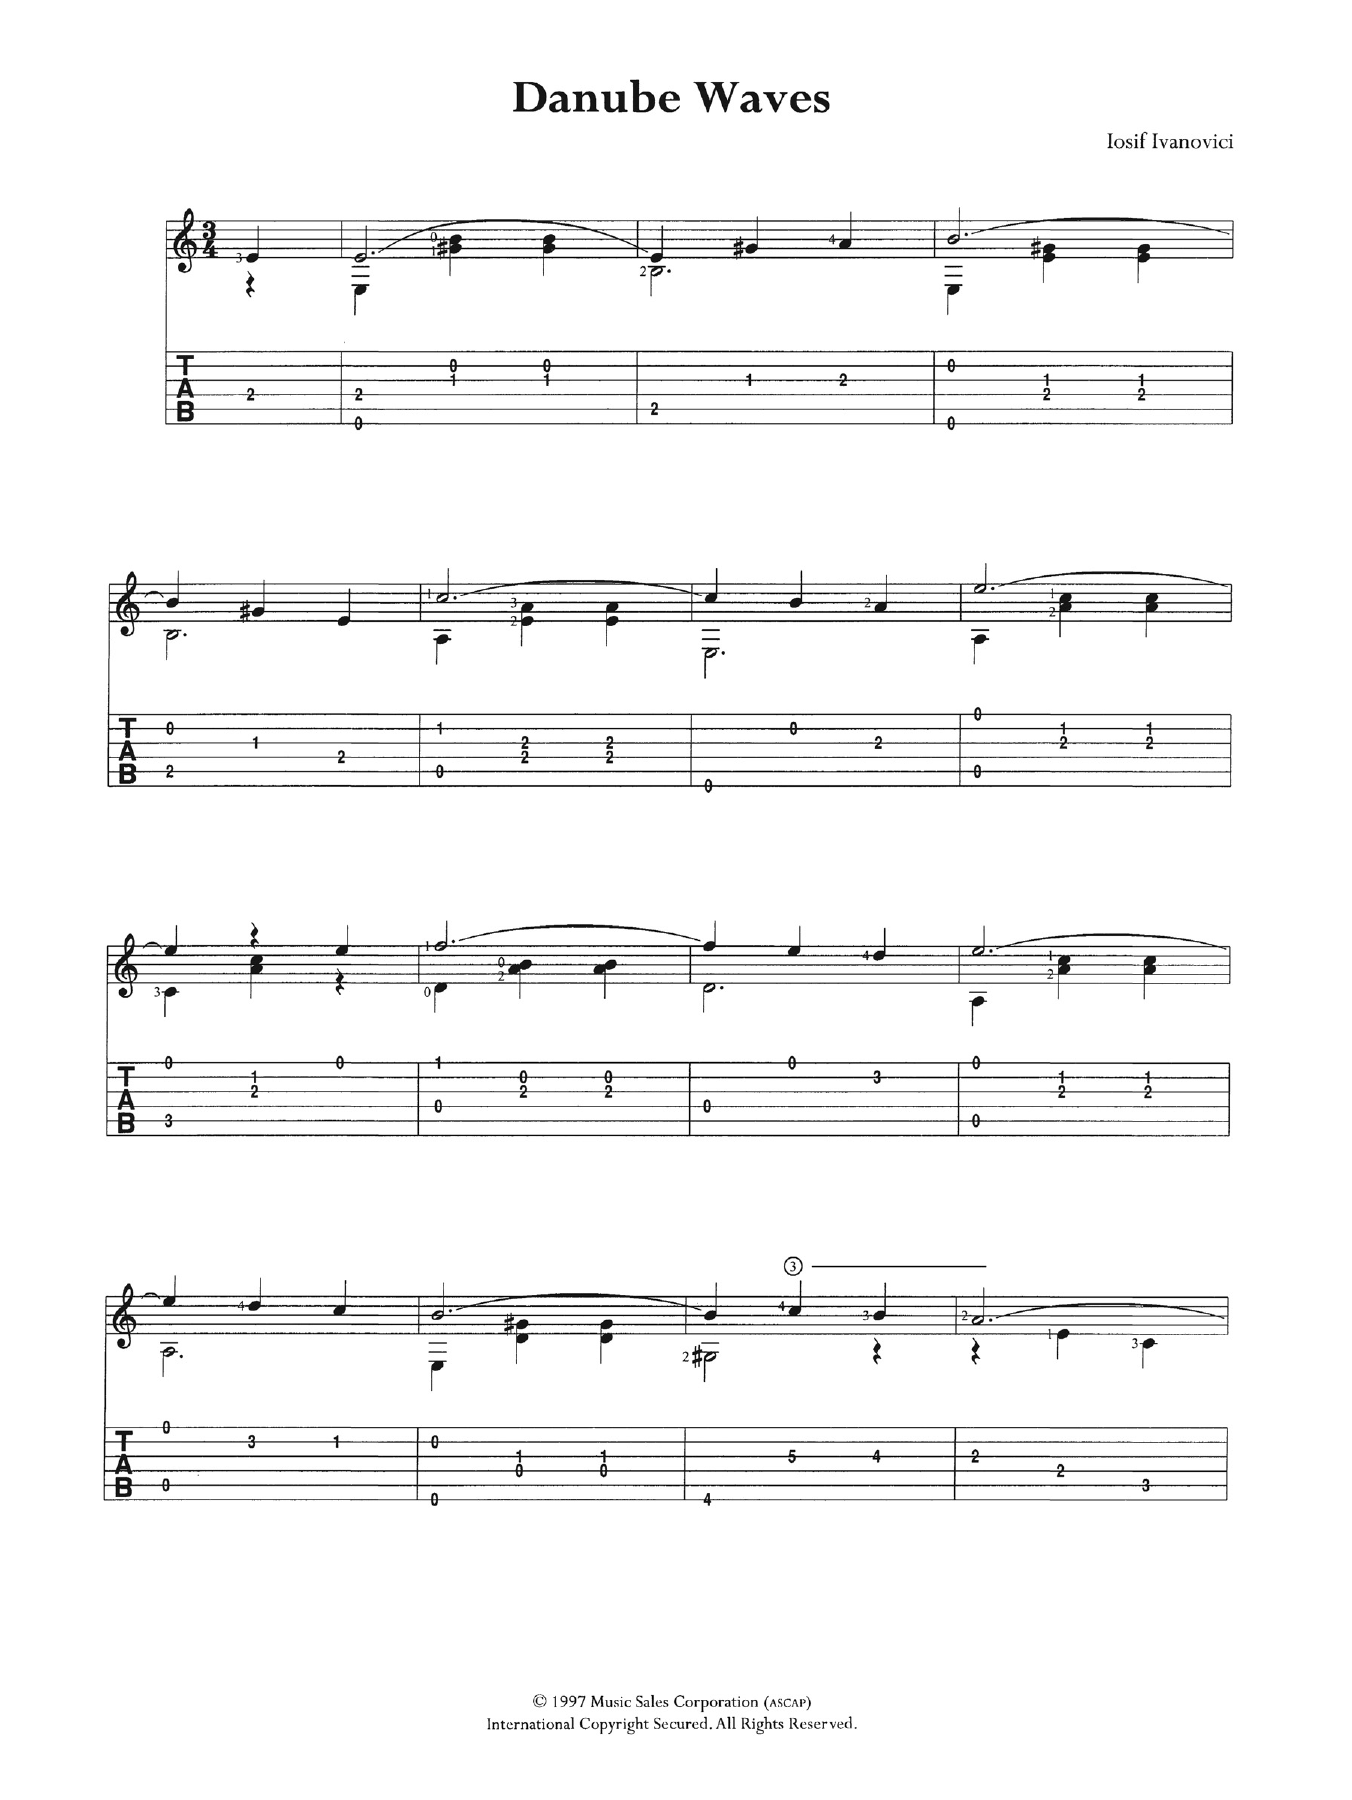 Iosif Ivanovici Danube Waves Sheet Music Notes & Chords for Guitar Tab - Download or Print PDF